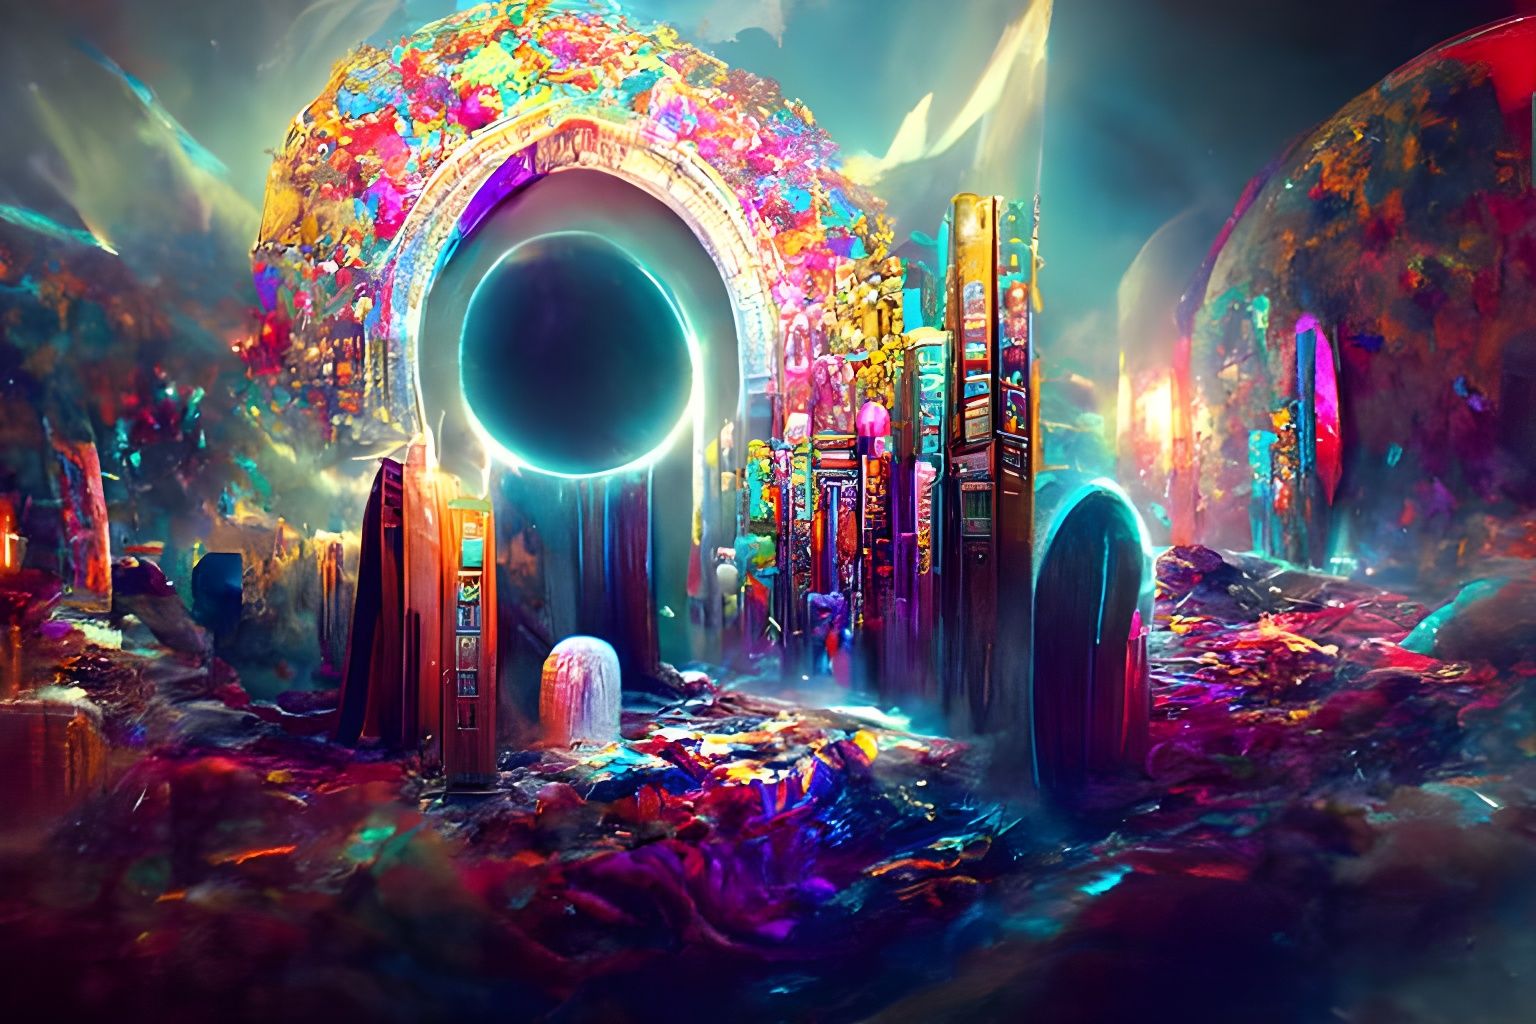 the portal